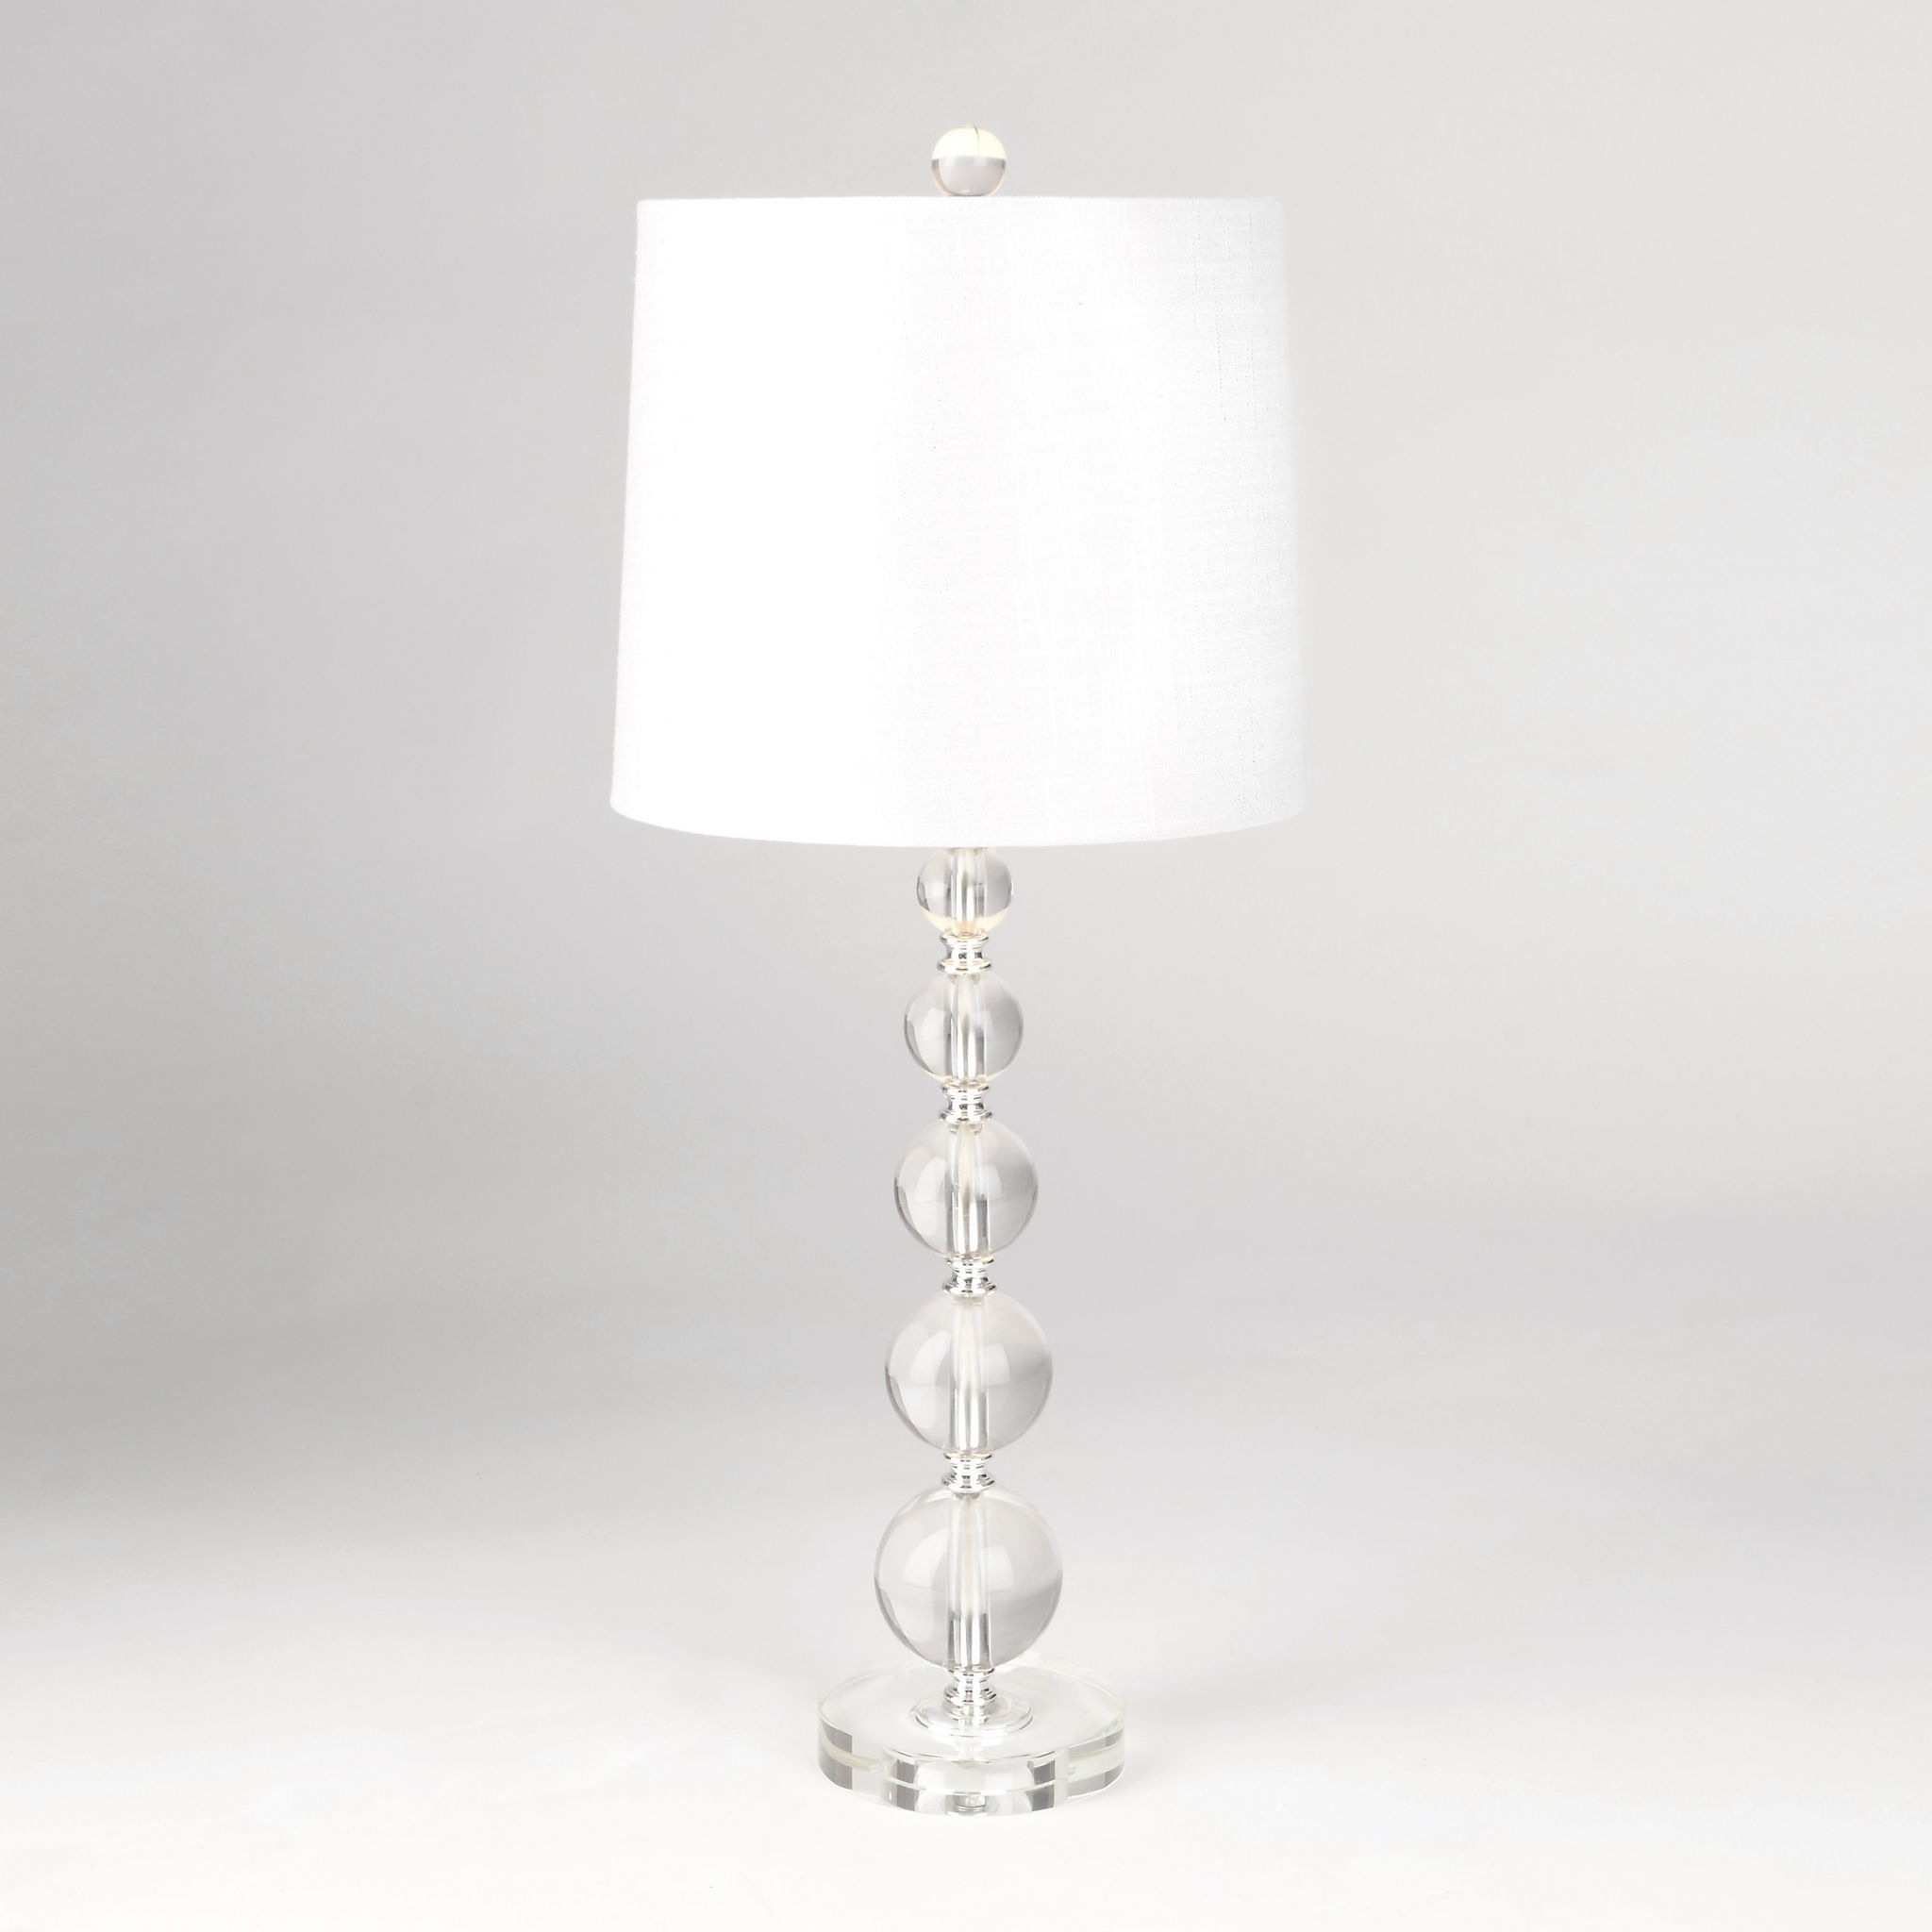 lamp for teenage girl